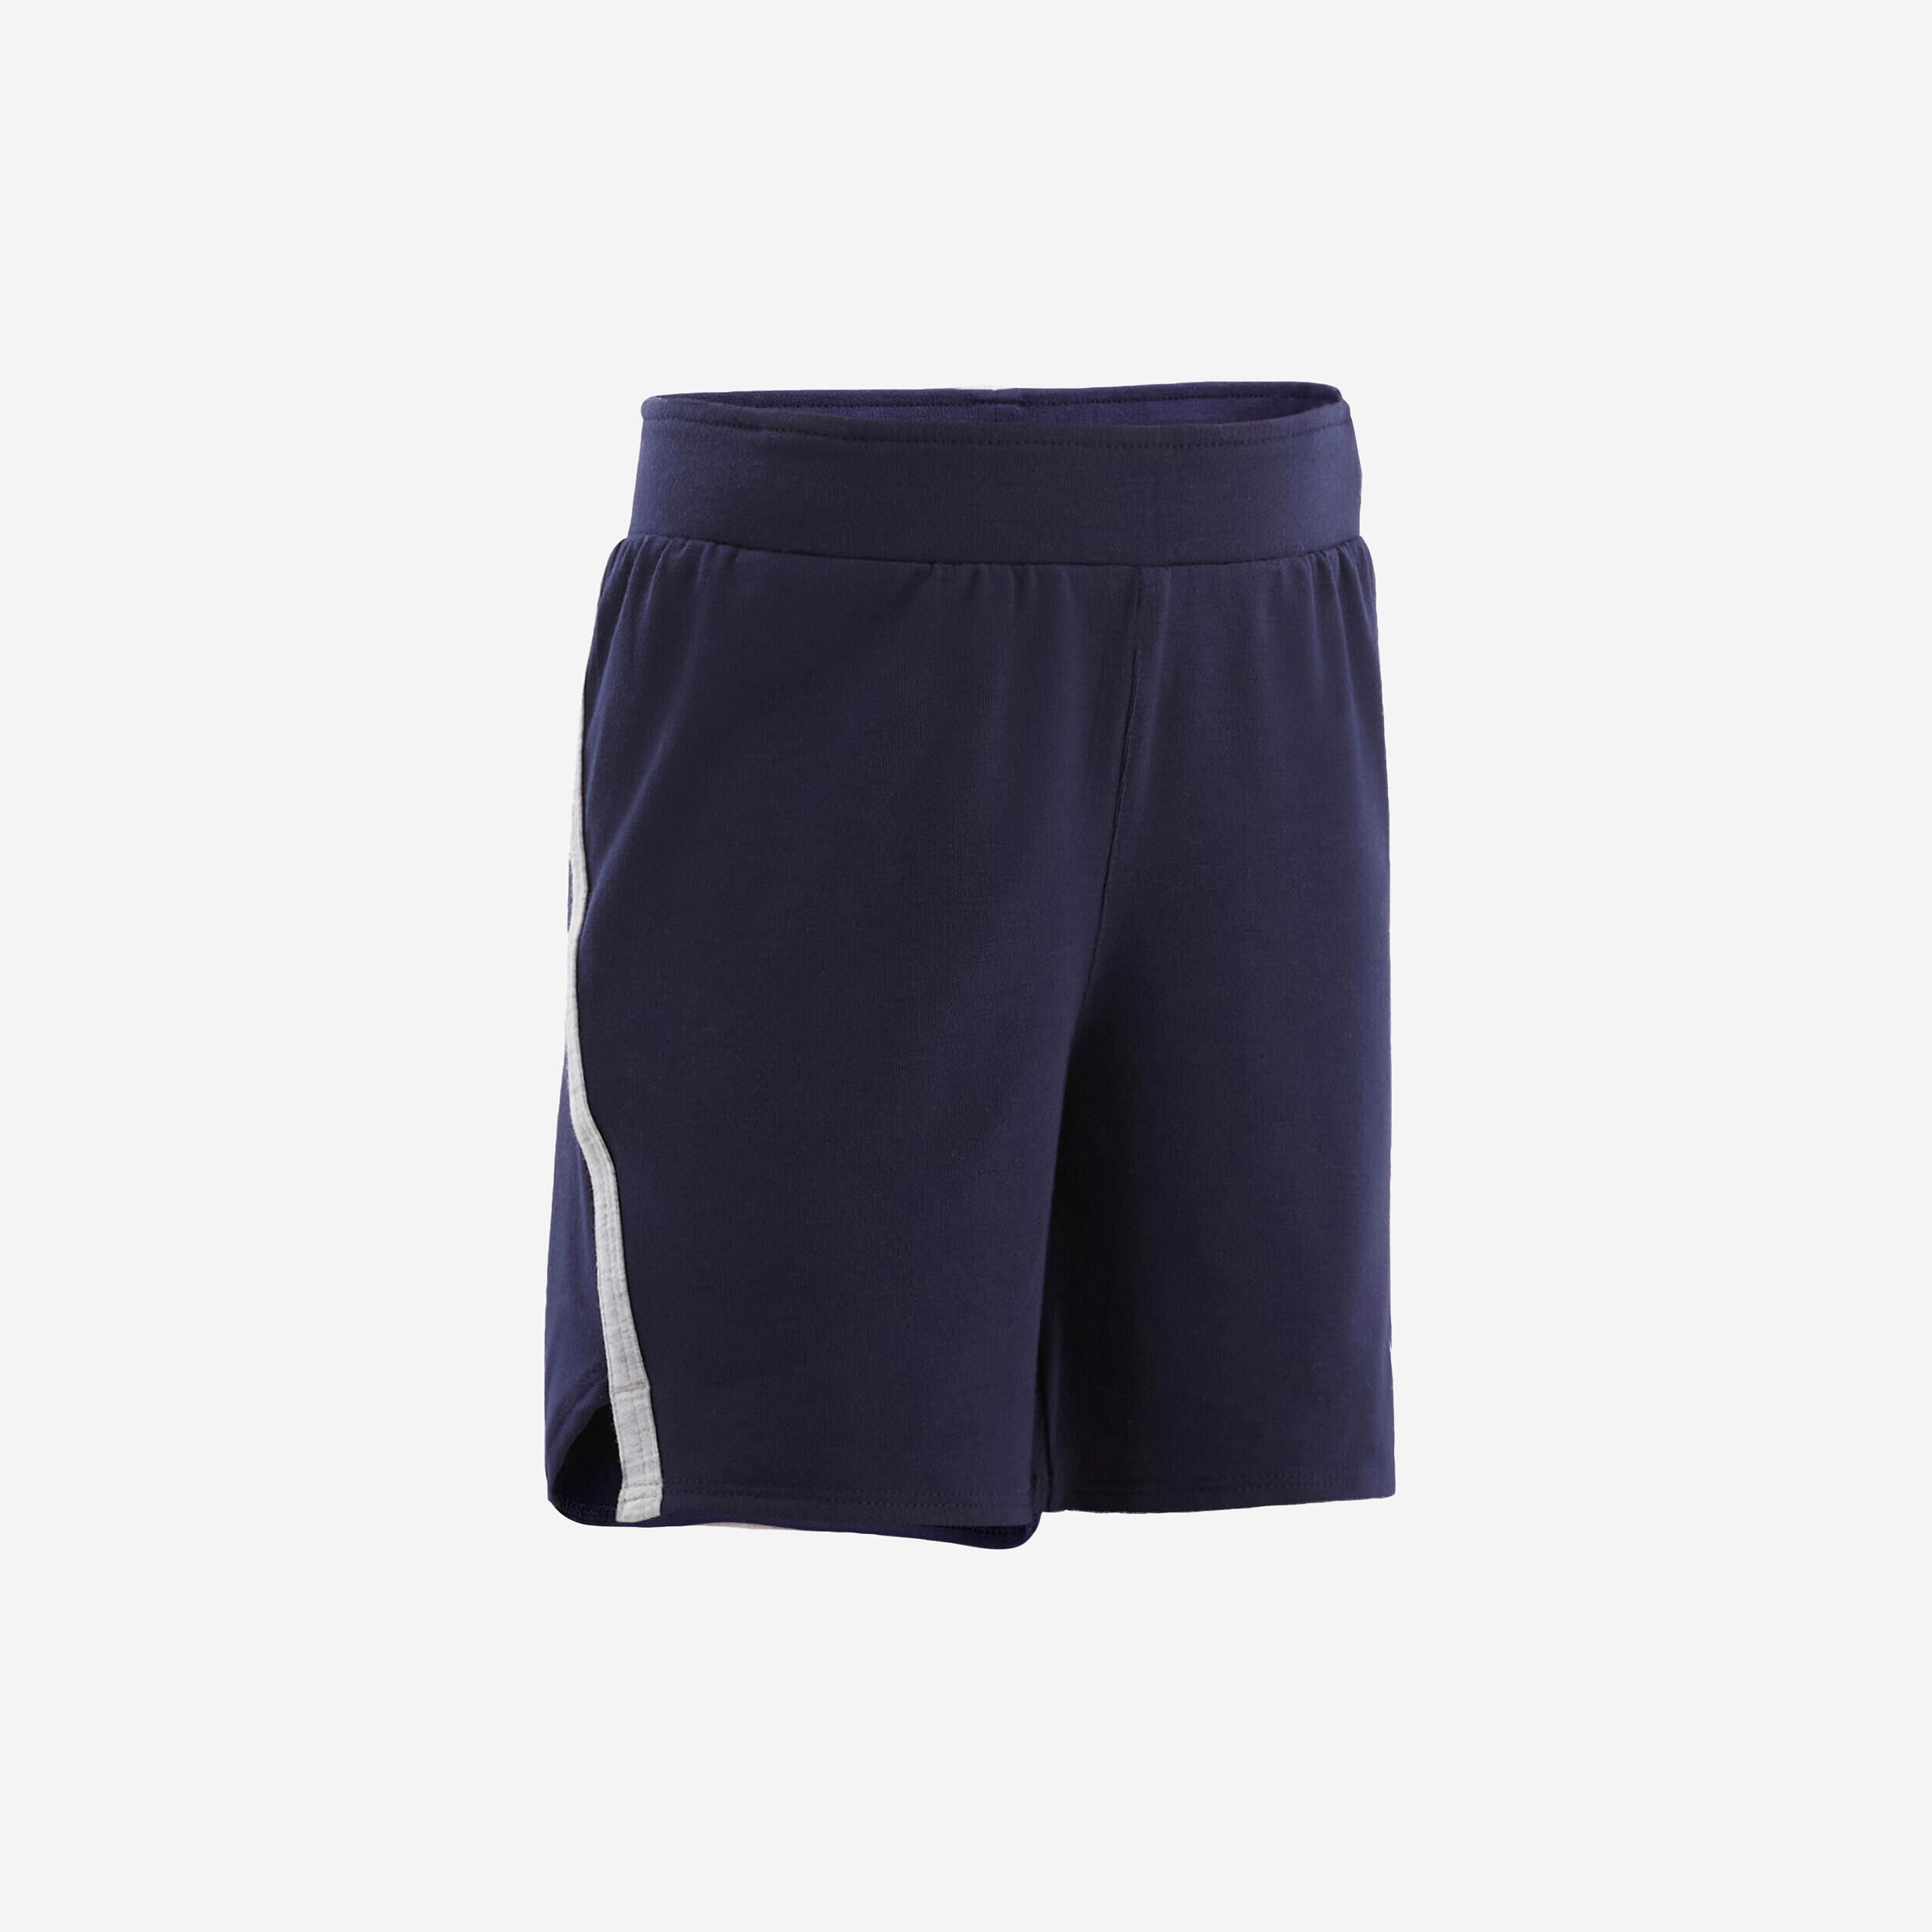 DOMYOS Kids' Breathable Adjustable Shorts 500 - Navy Blue